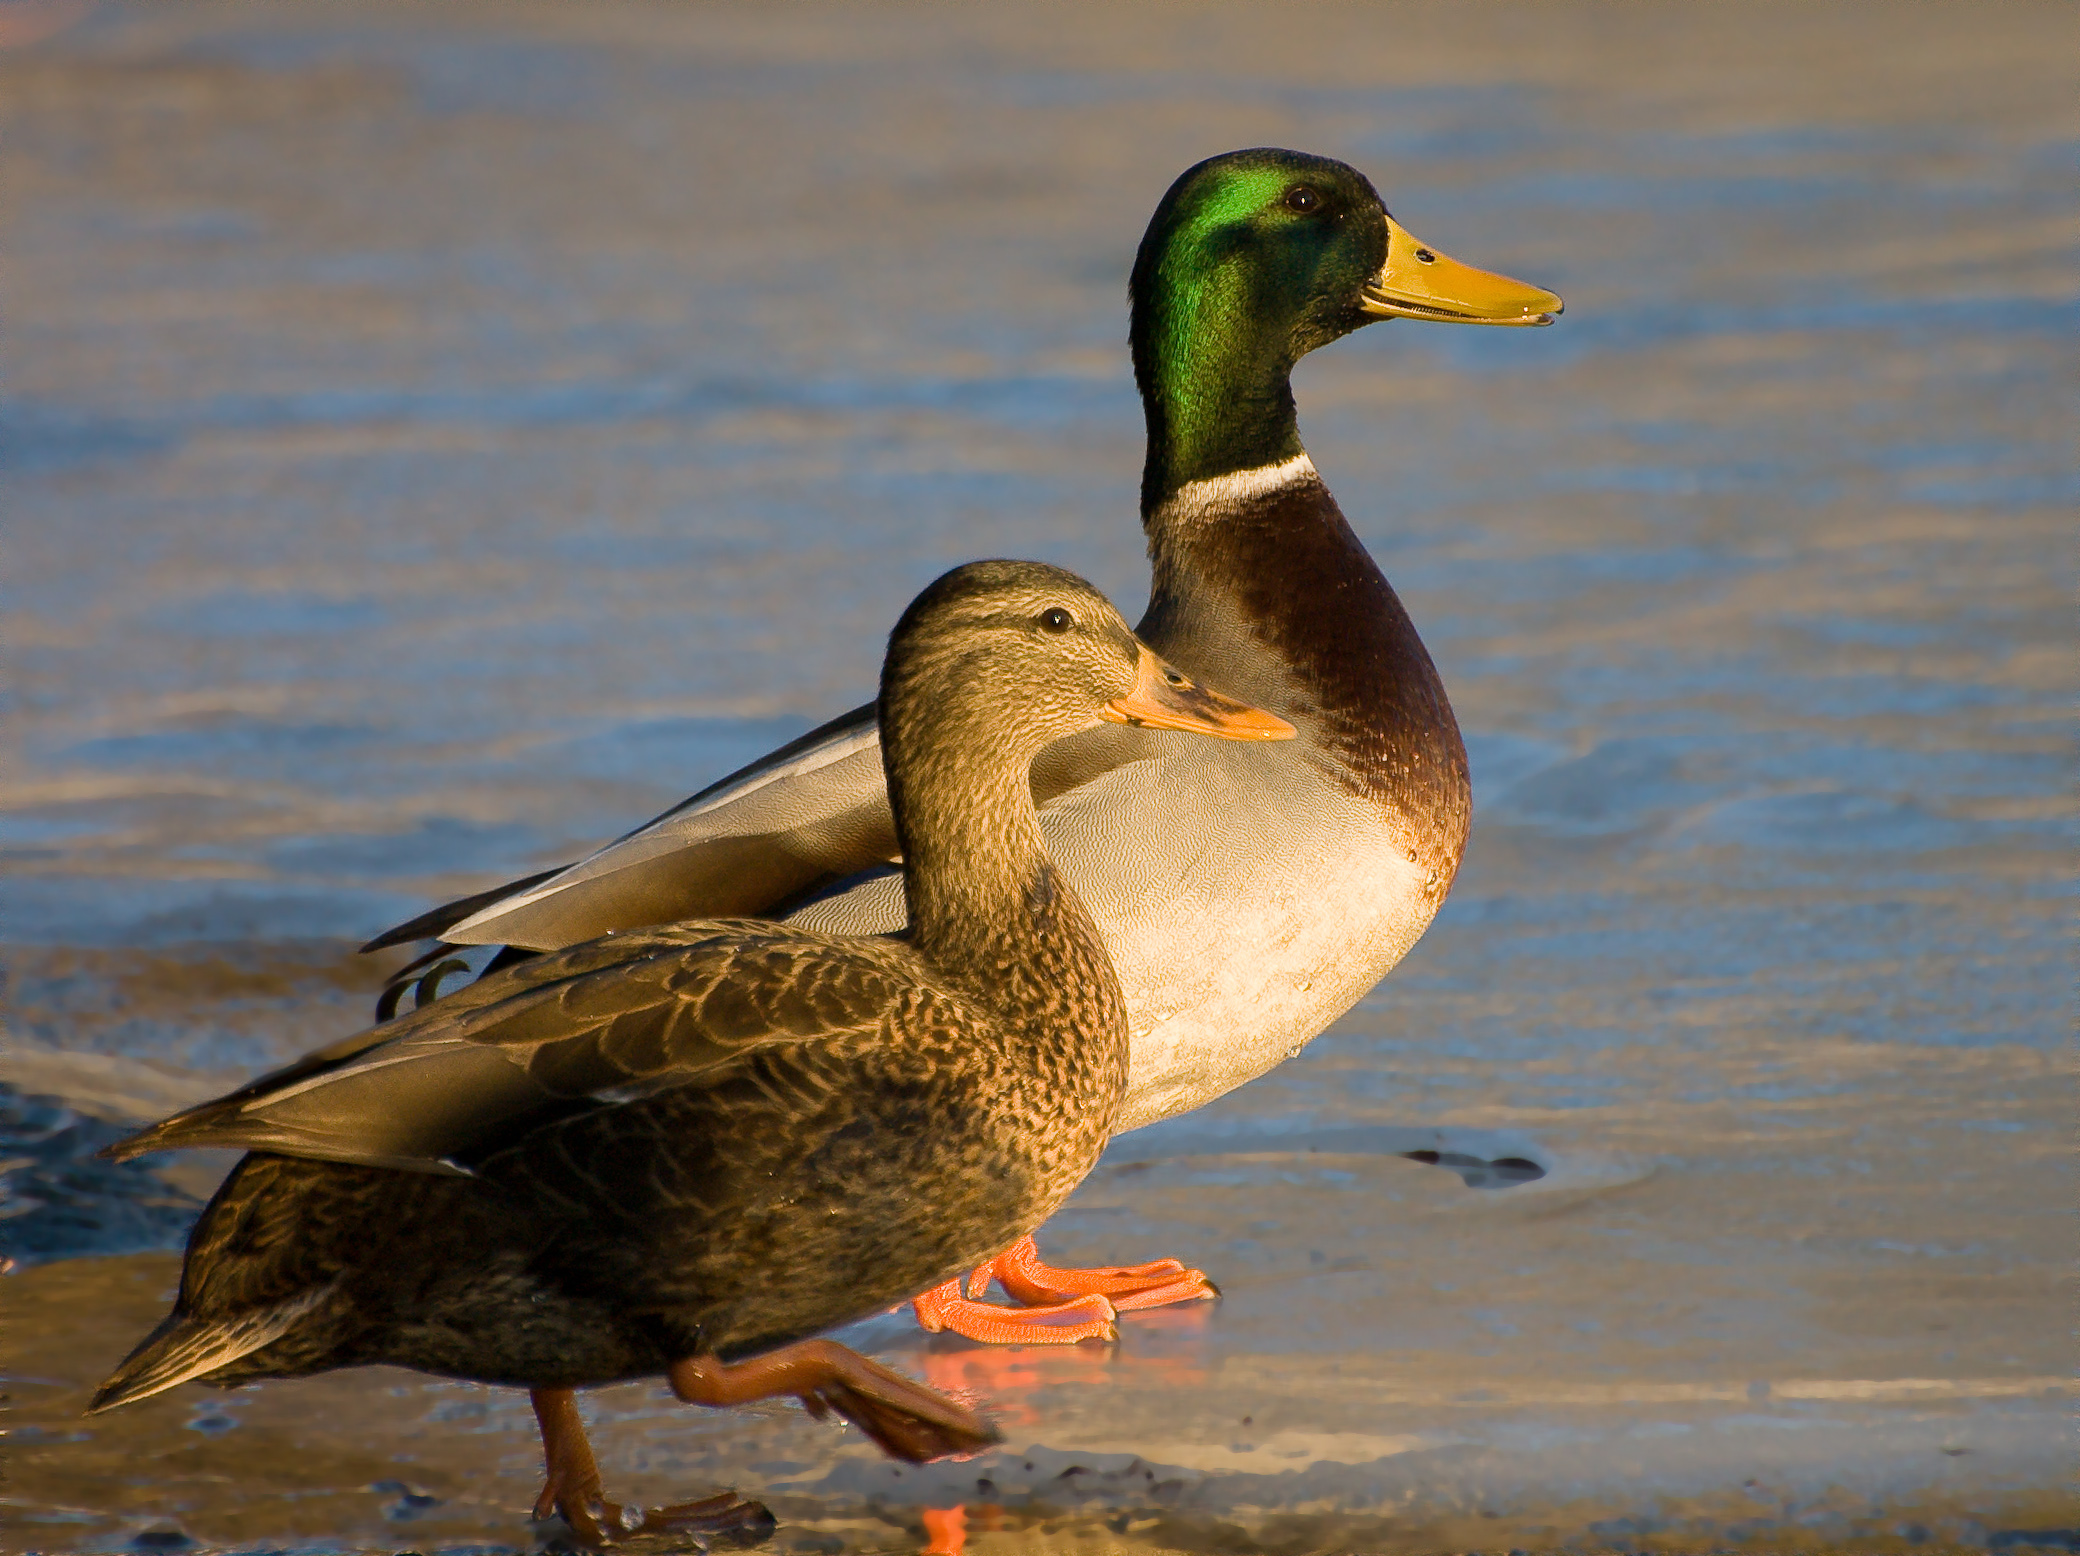 File:Male and Female mallard ducks.jpg - Wikimedia Commons